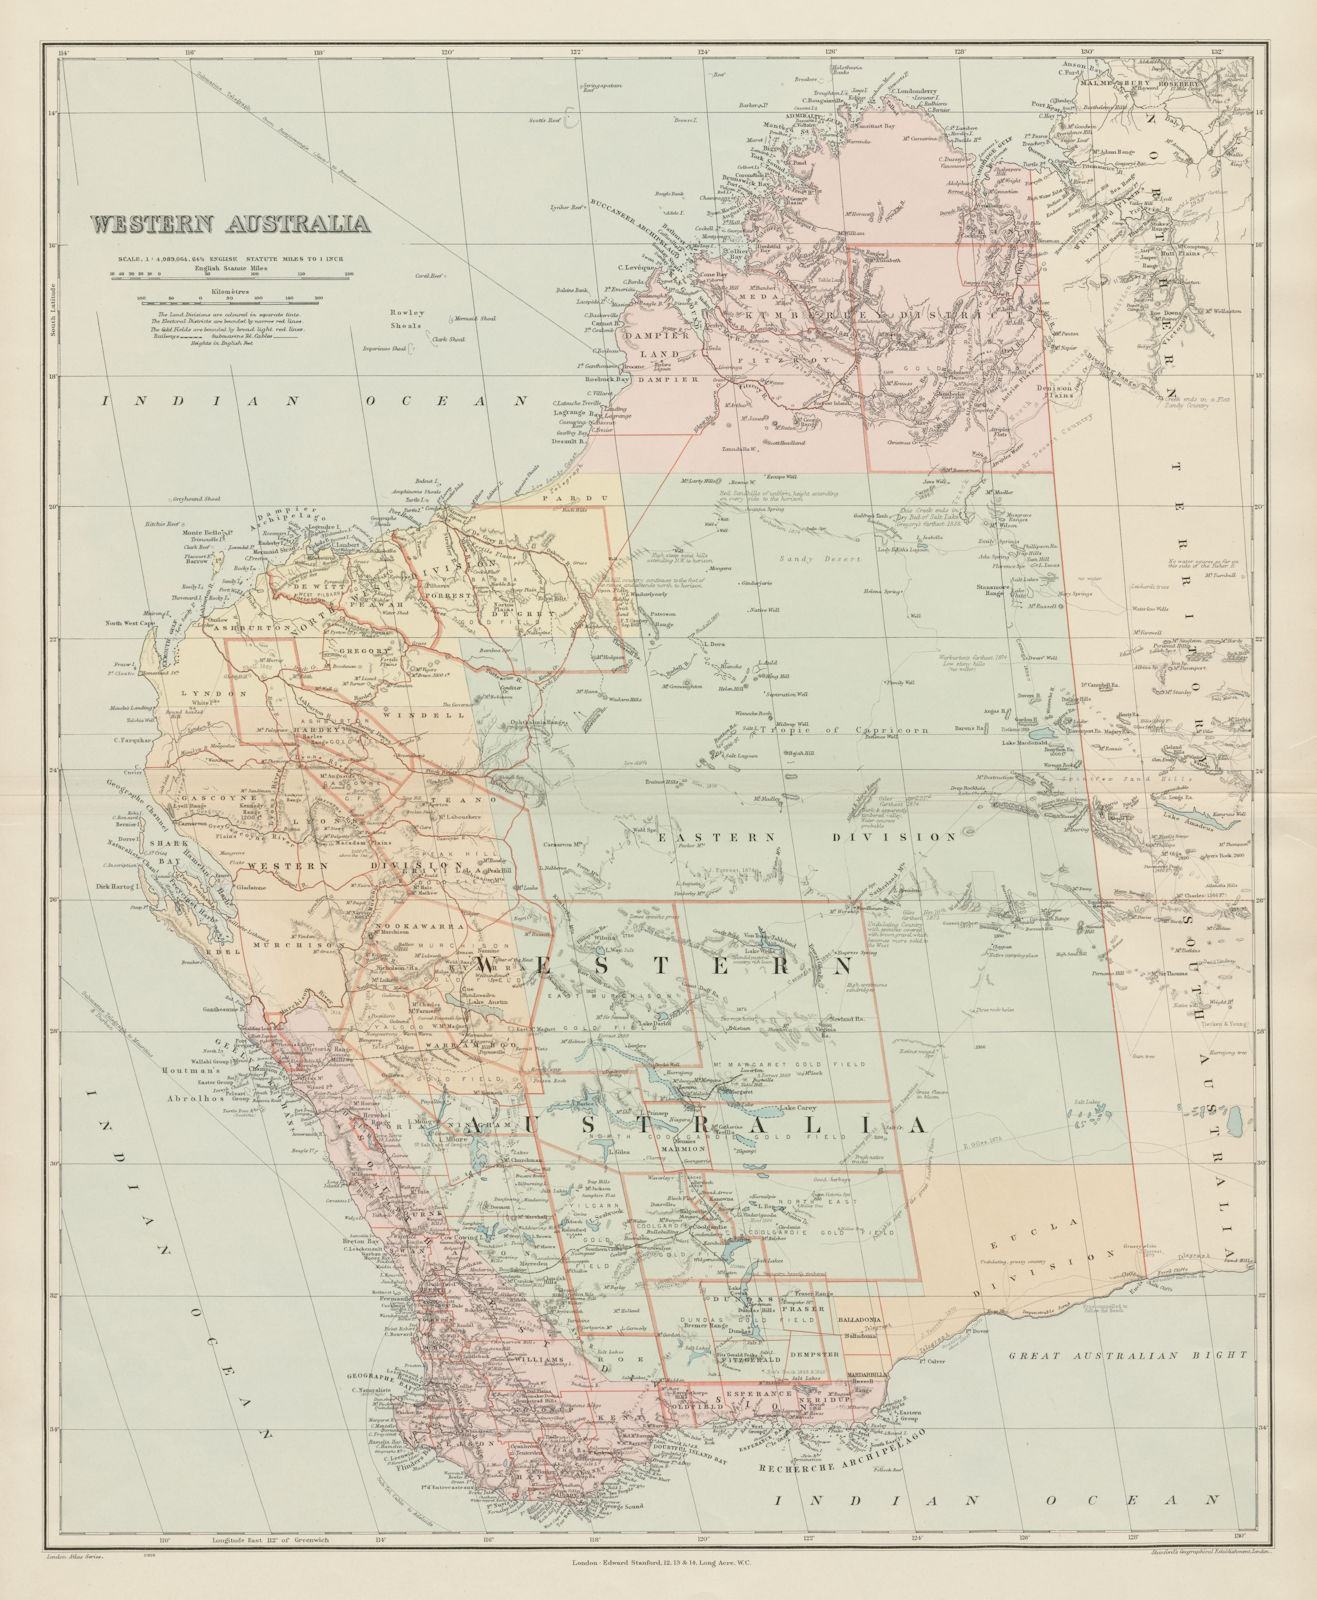 Western Australia. Explorers' routes. Landscape observations. STANFORD 1904 map